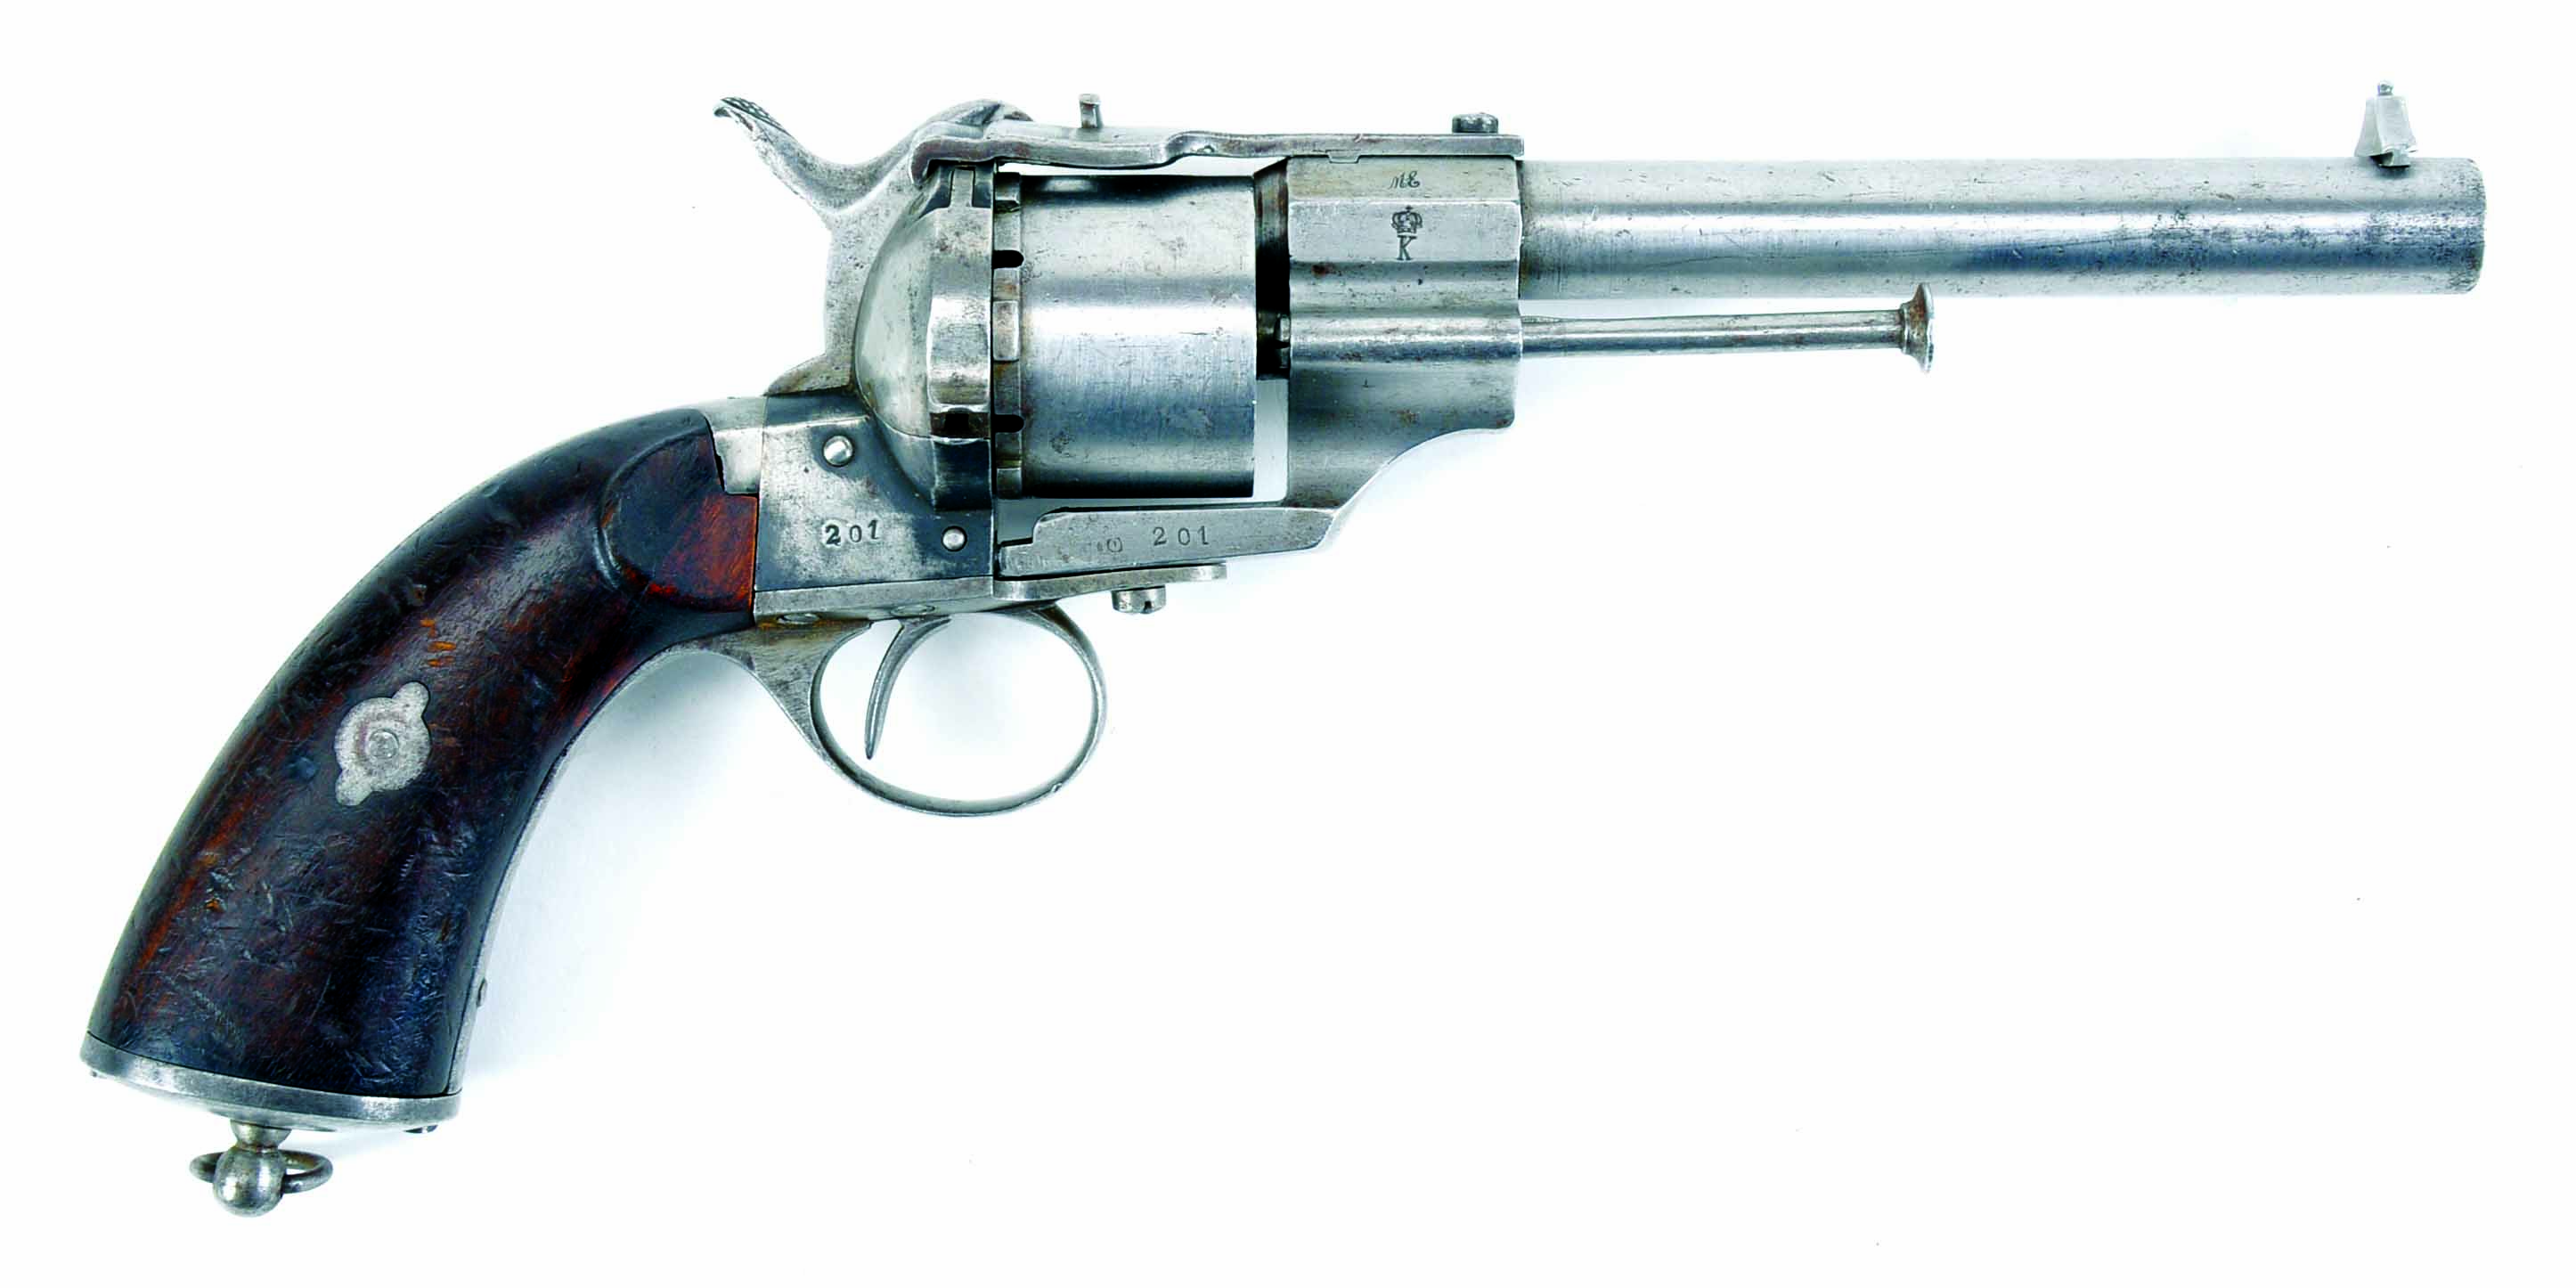 ./guns/revolver/bilder/Revolver-Kongsberg-Lefaucheux-M1864-201-1.jpg